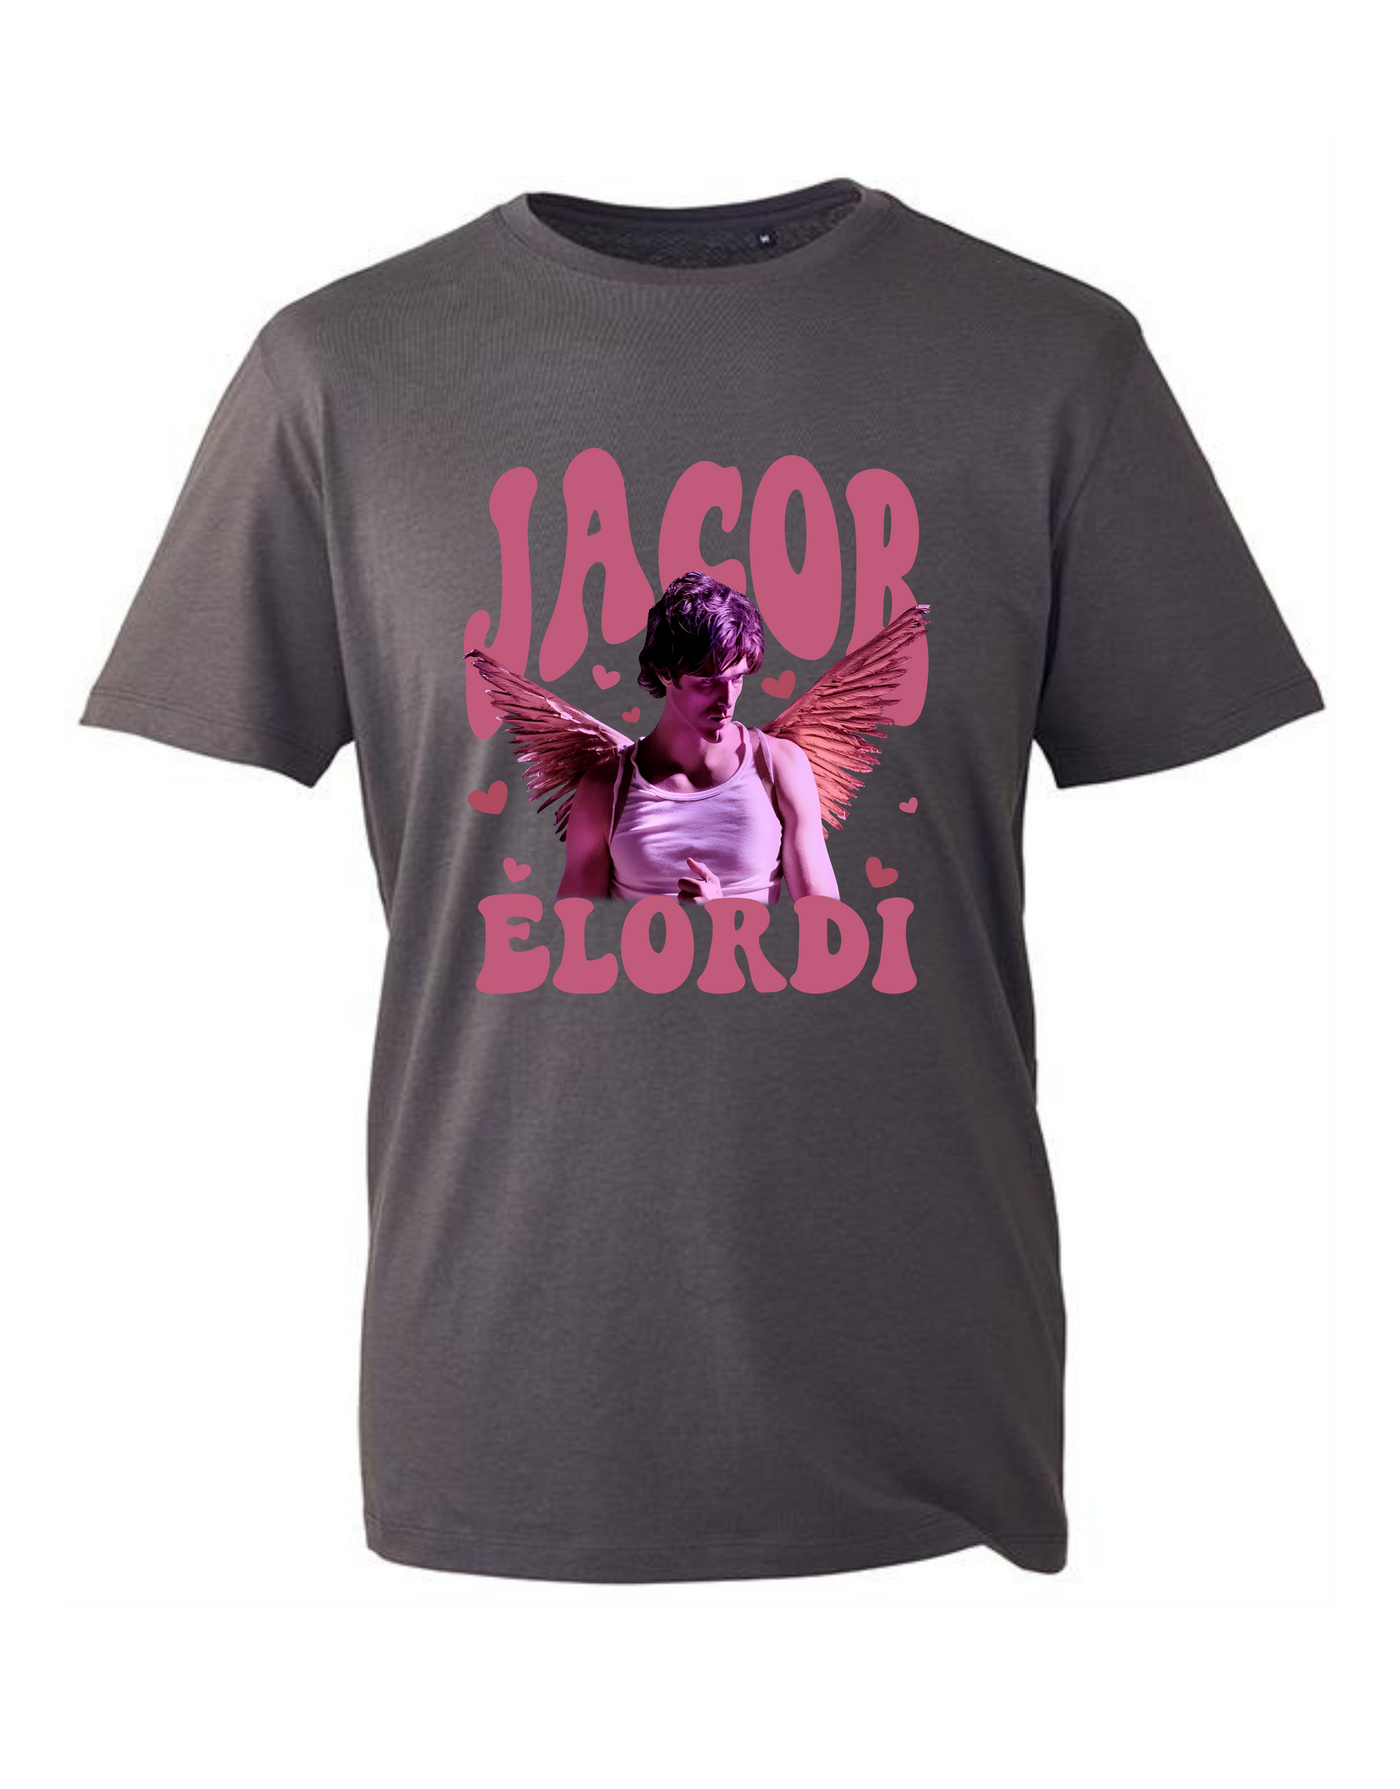 "Jacob Elordi" Unisex Organic T-Shirt